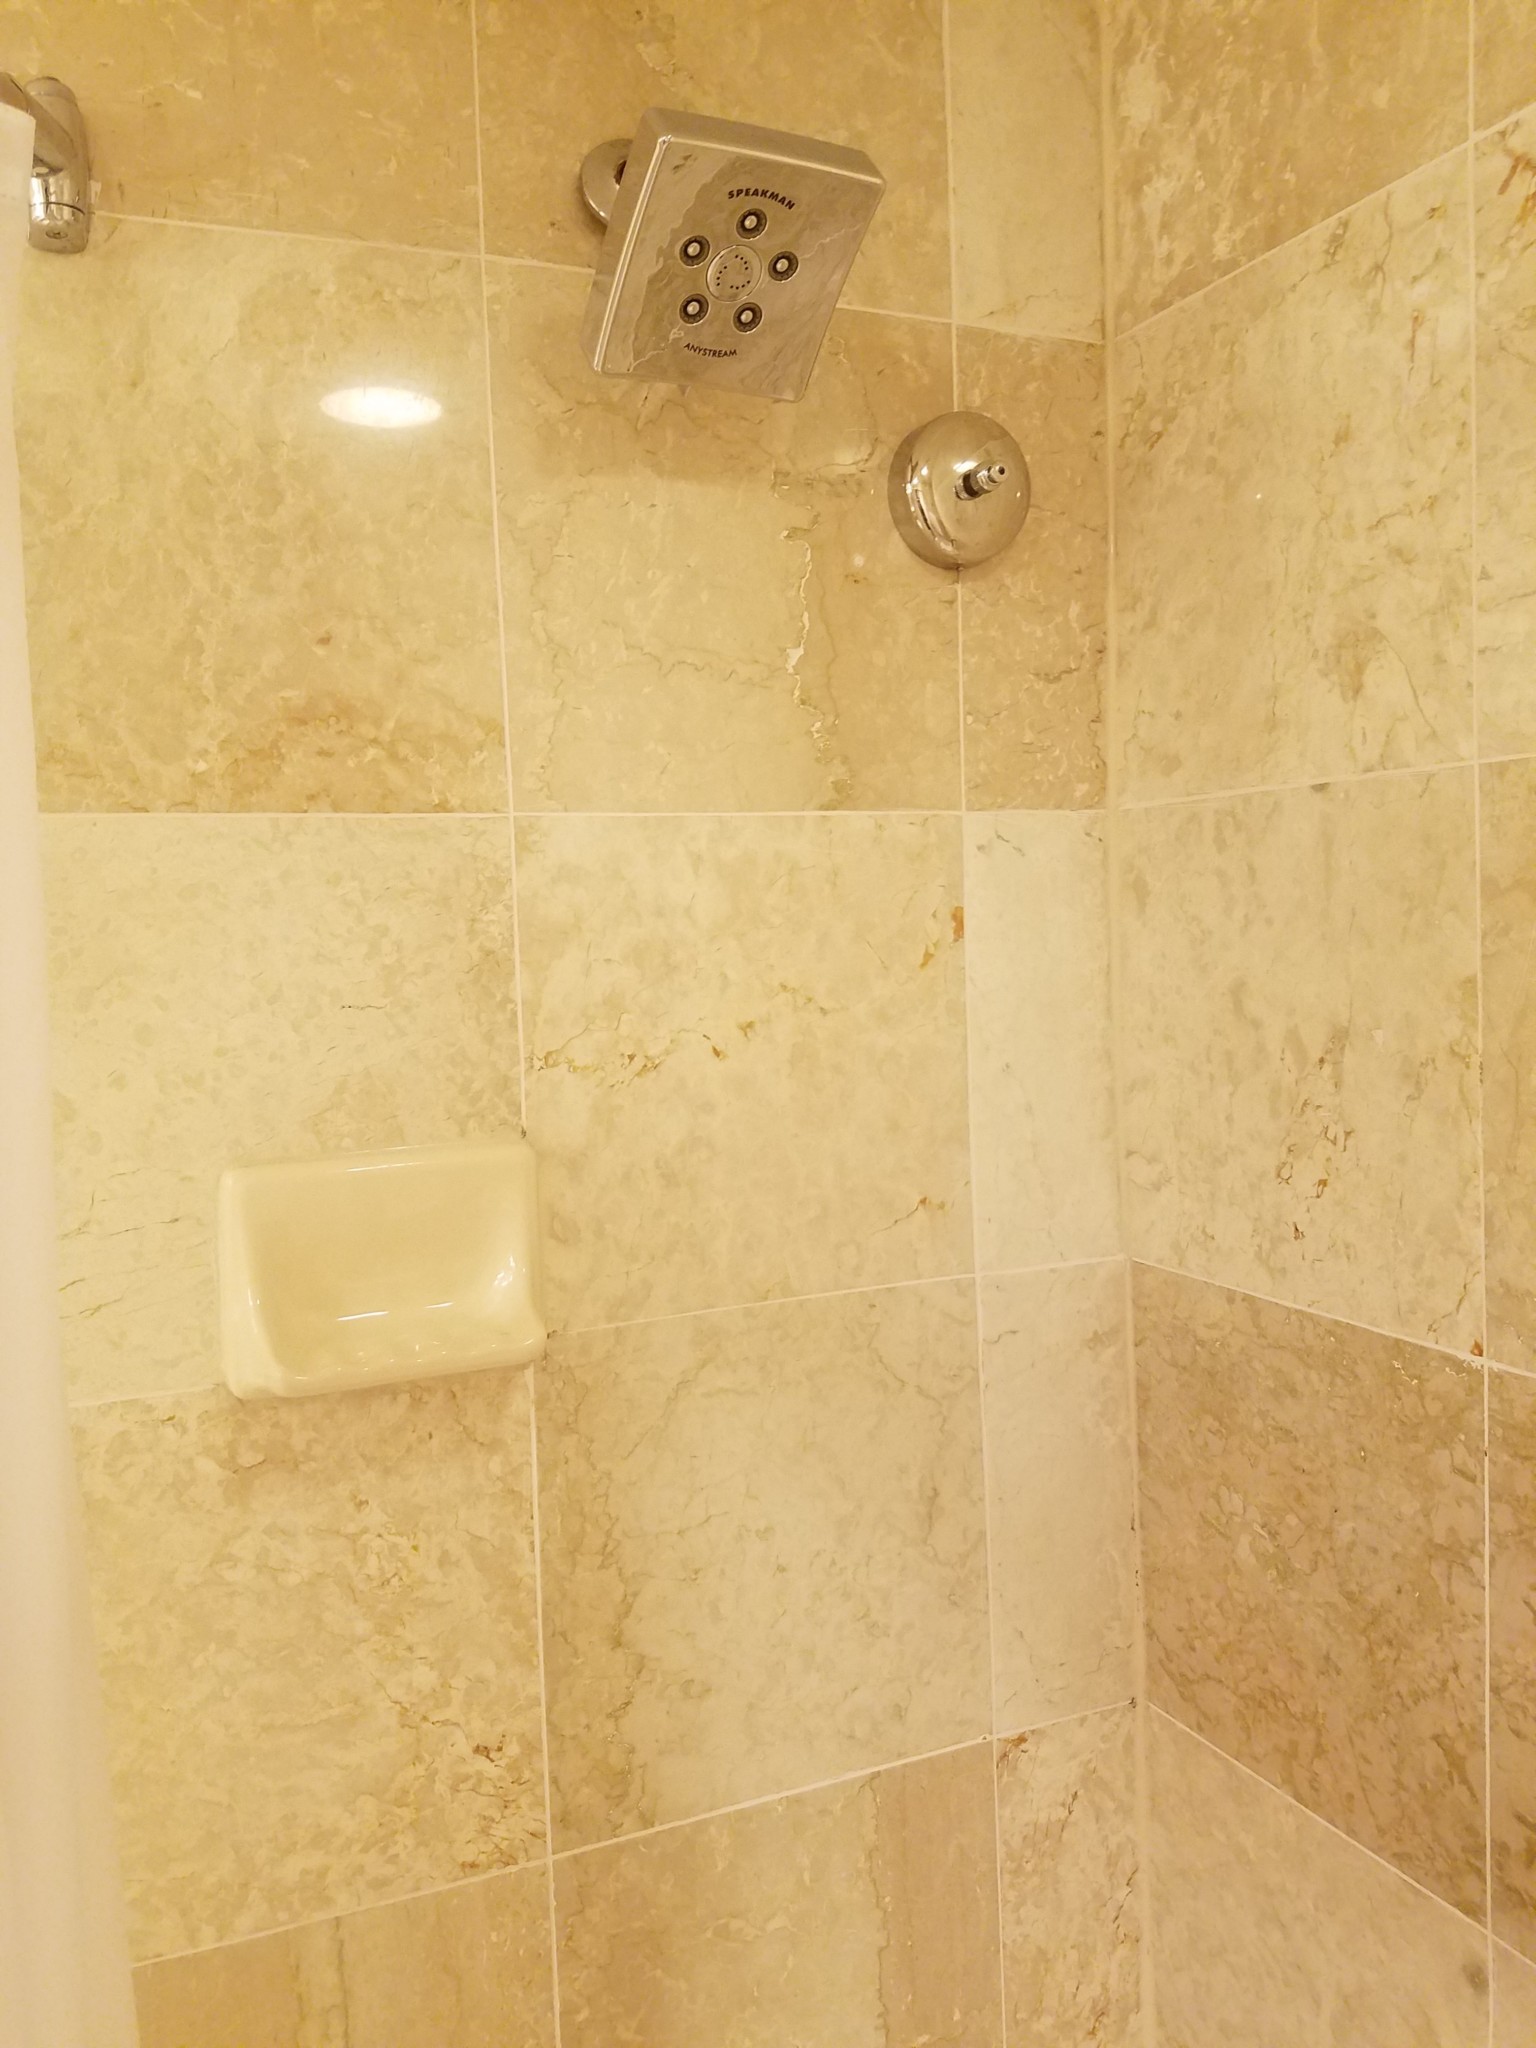 Decent shower